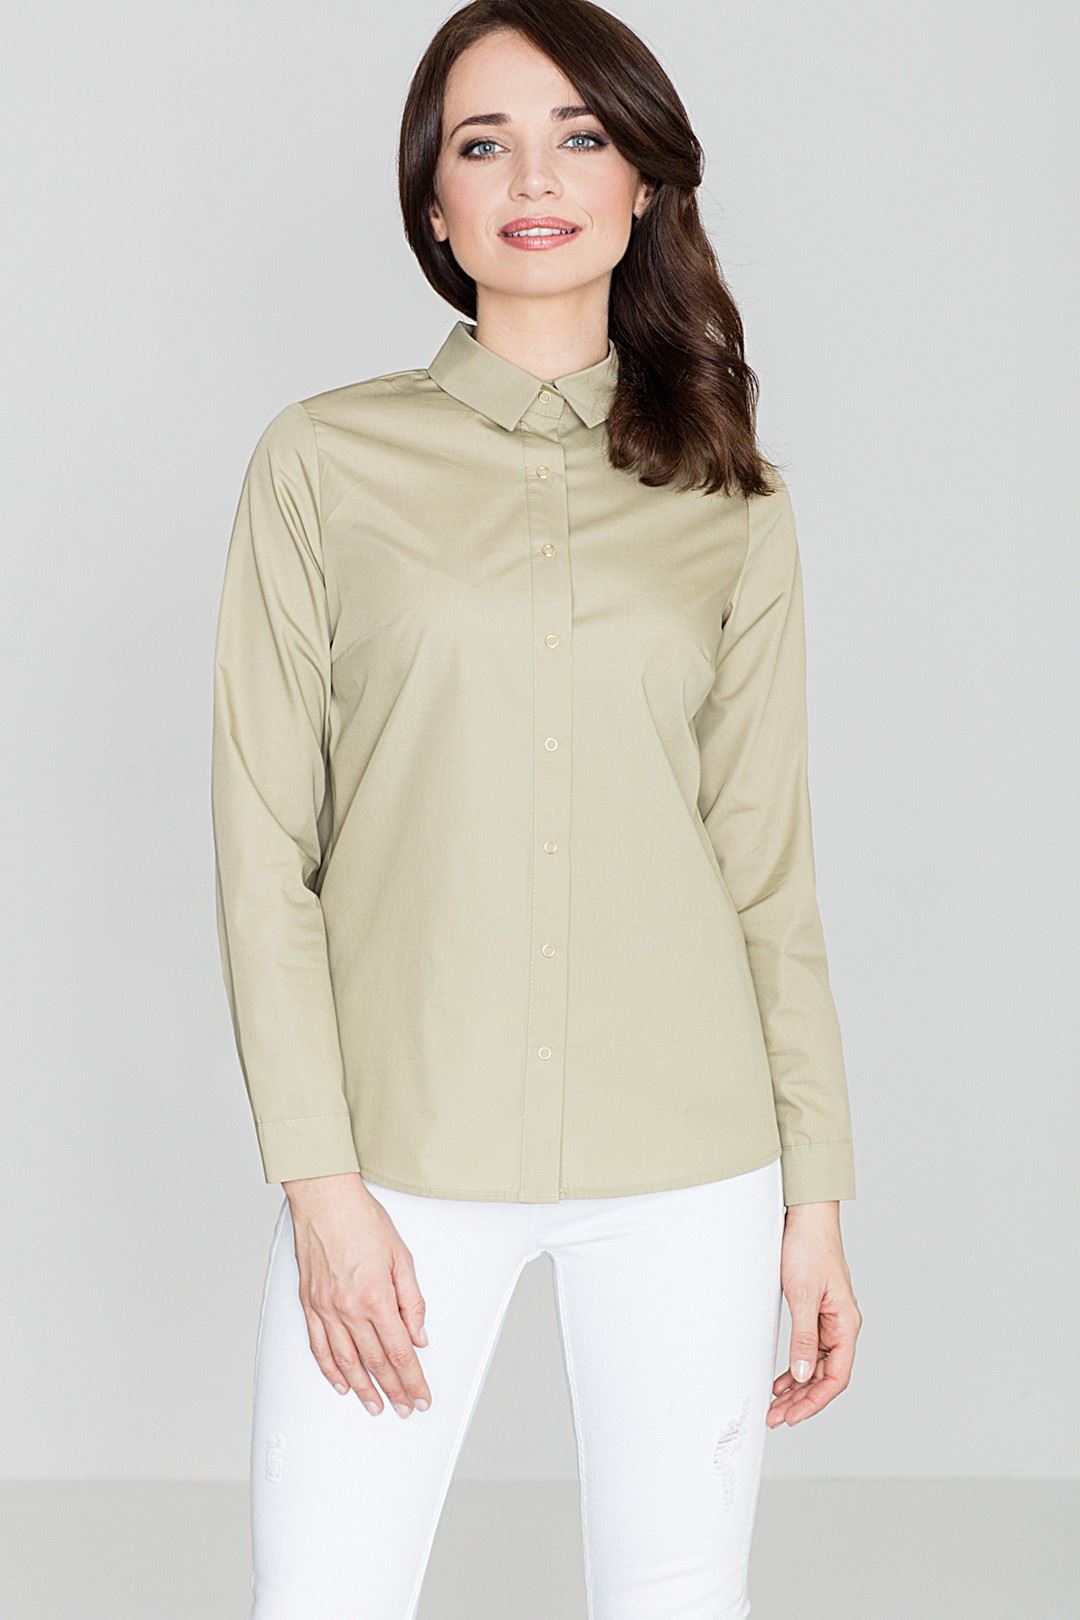 Shirt K384 Olive XL